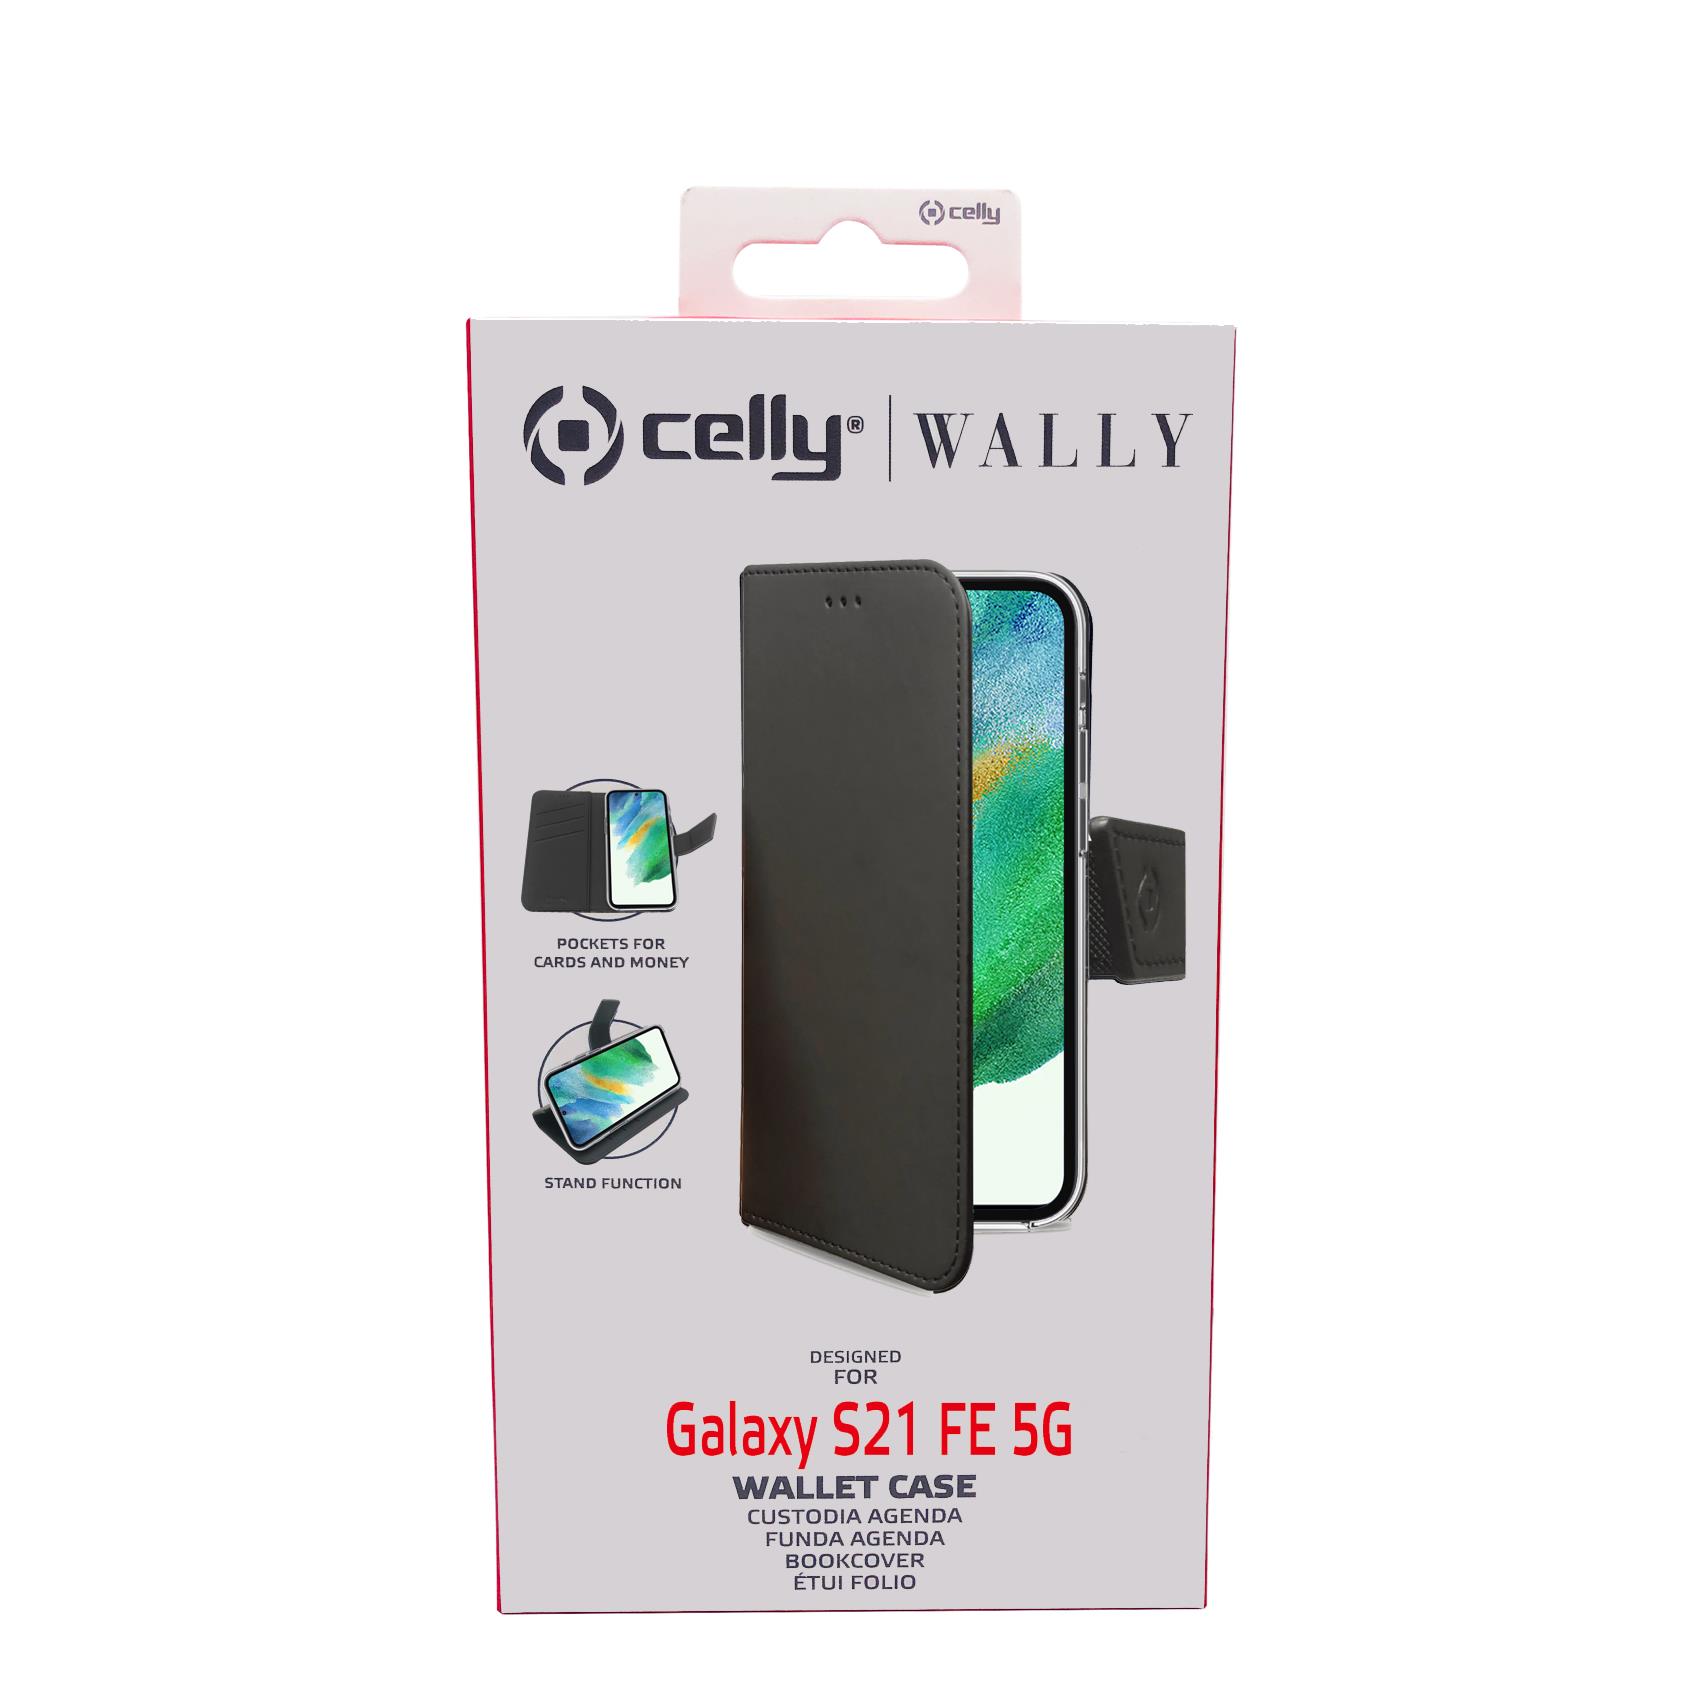 Custodia Celly Samsung S21 FE 5G wallet case black WALLY970